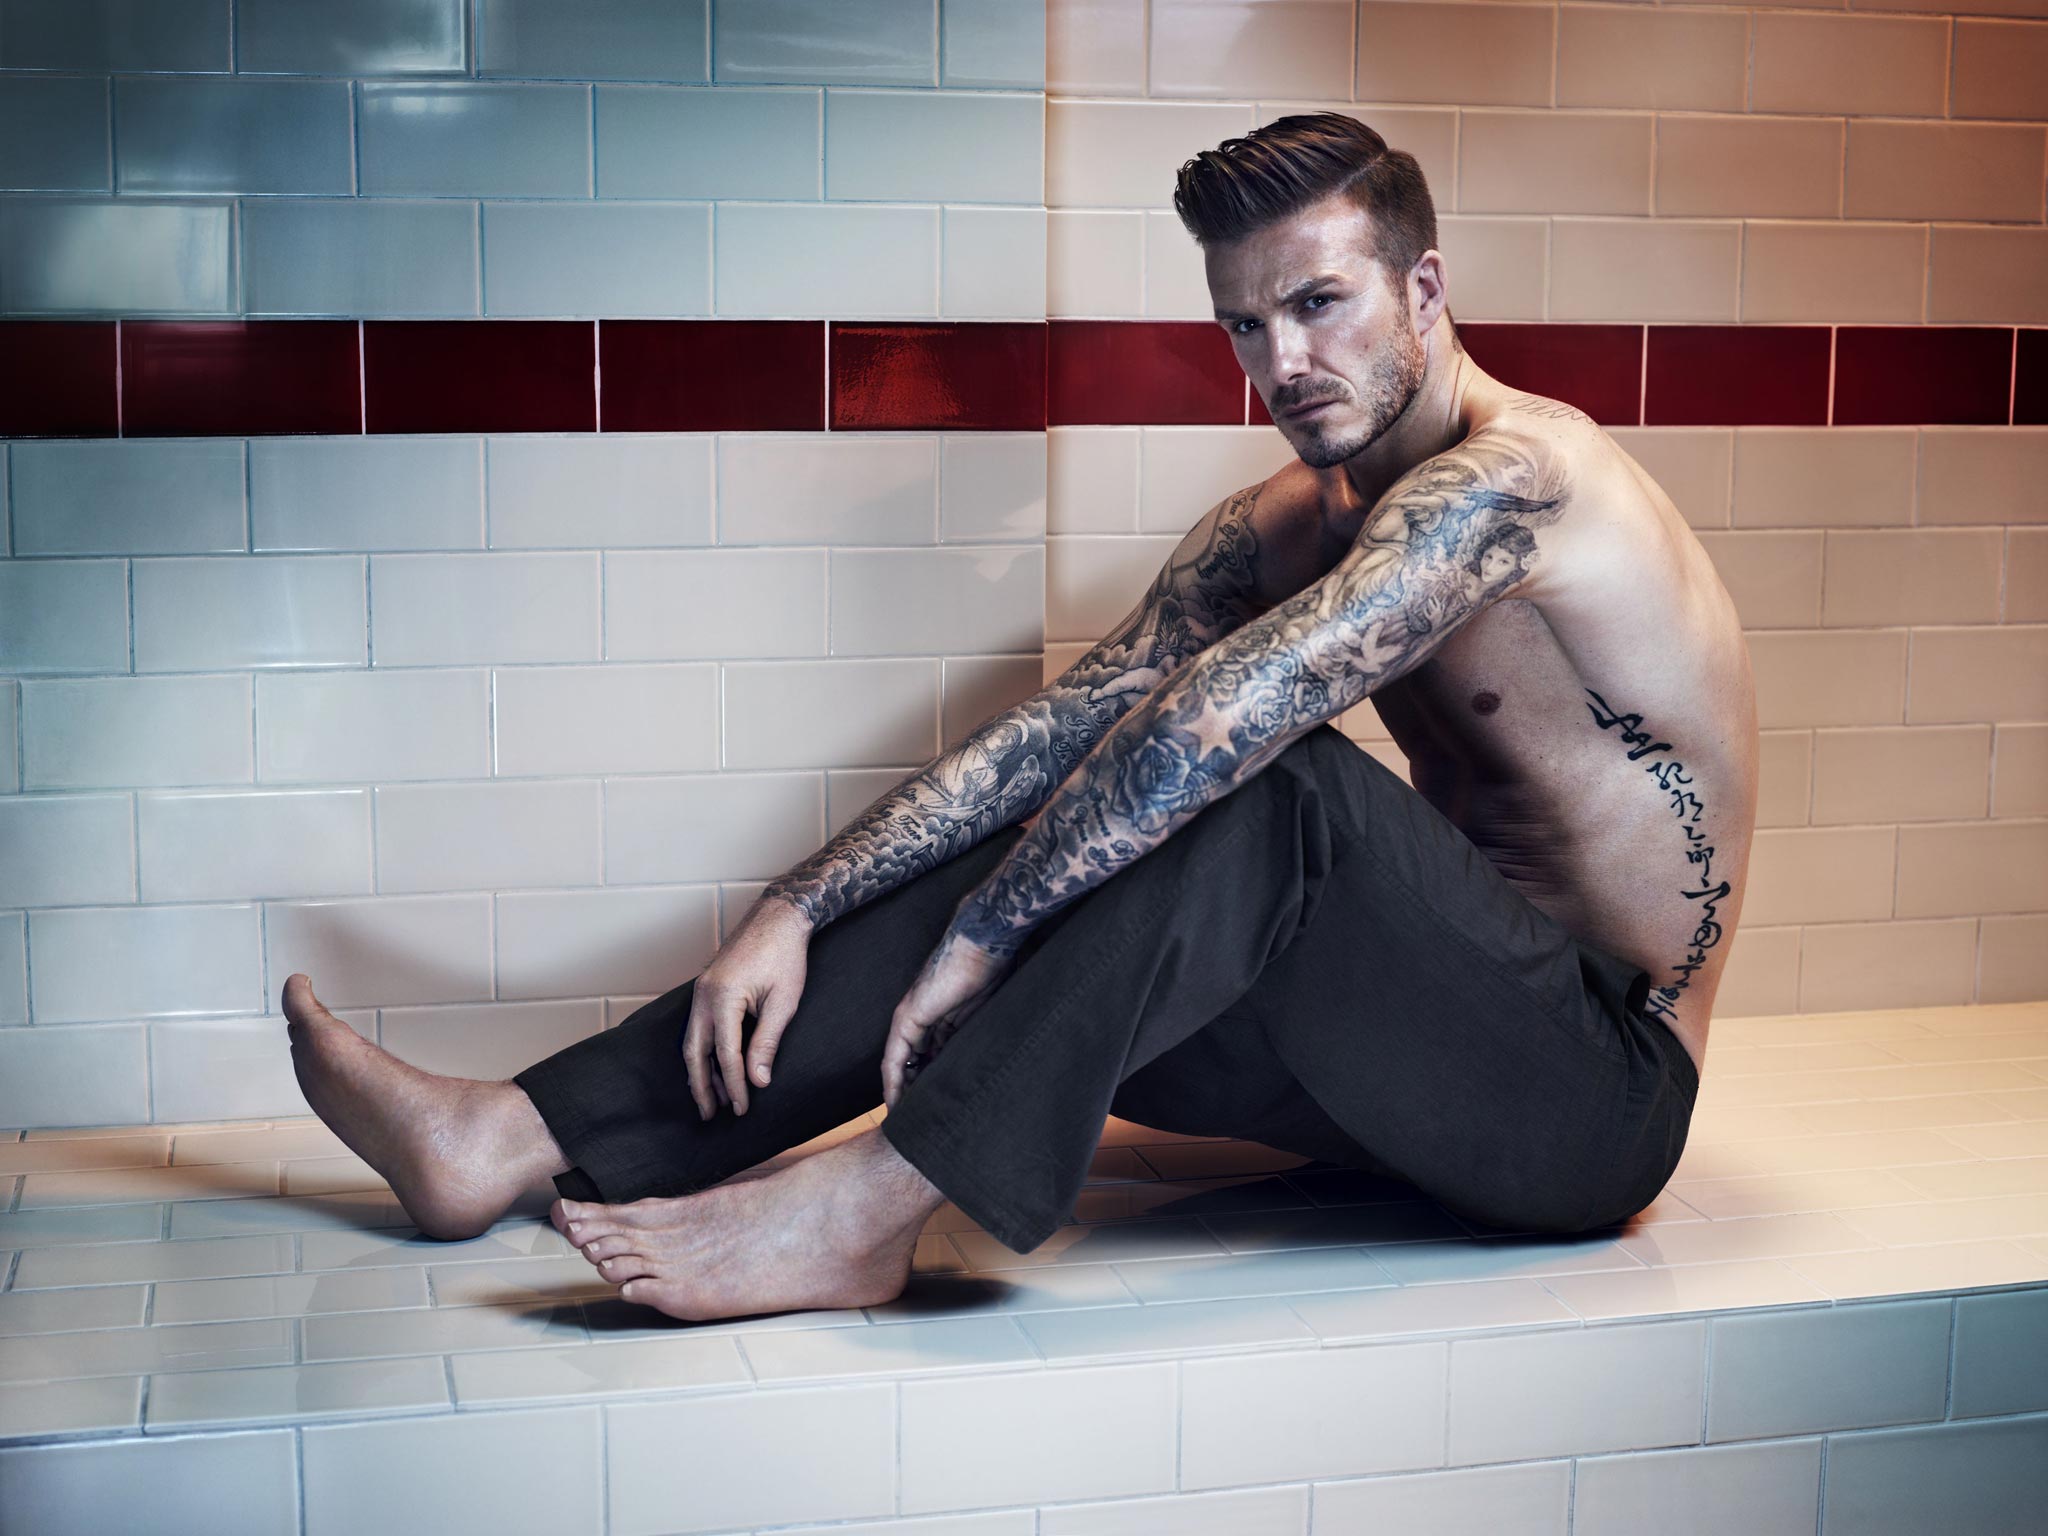 David Beckham has also visited the tattoo parlour